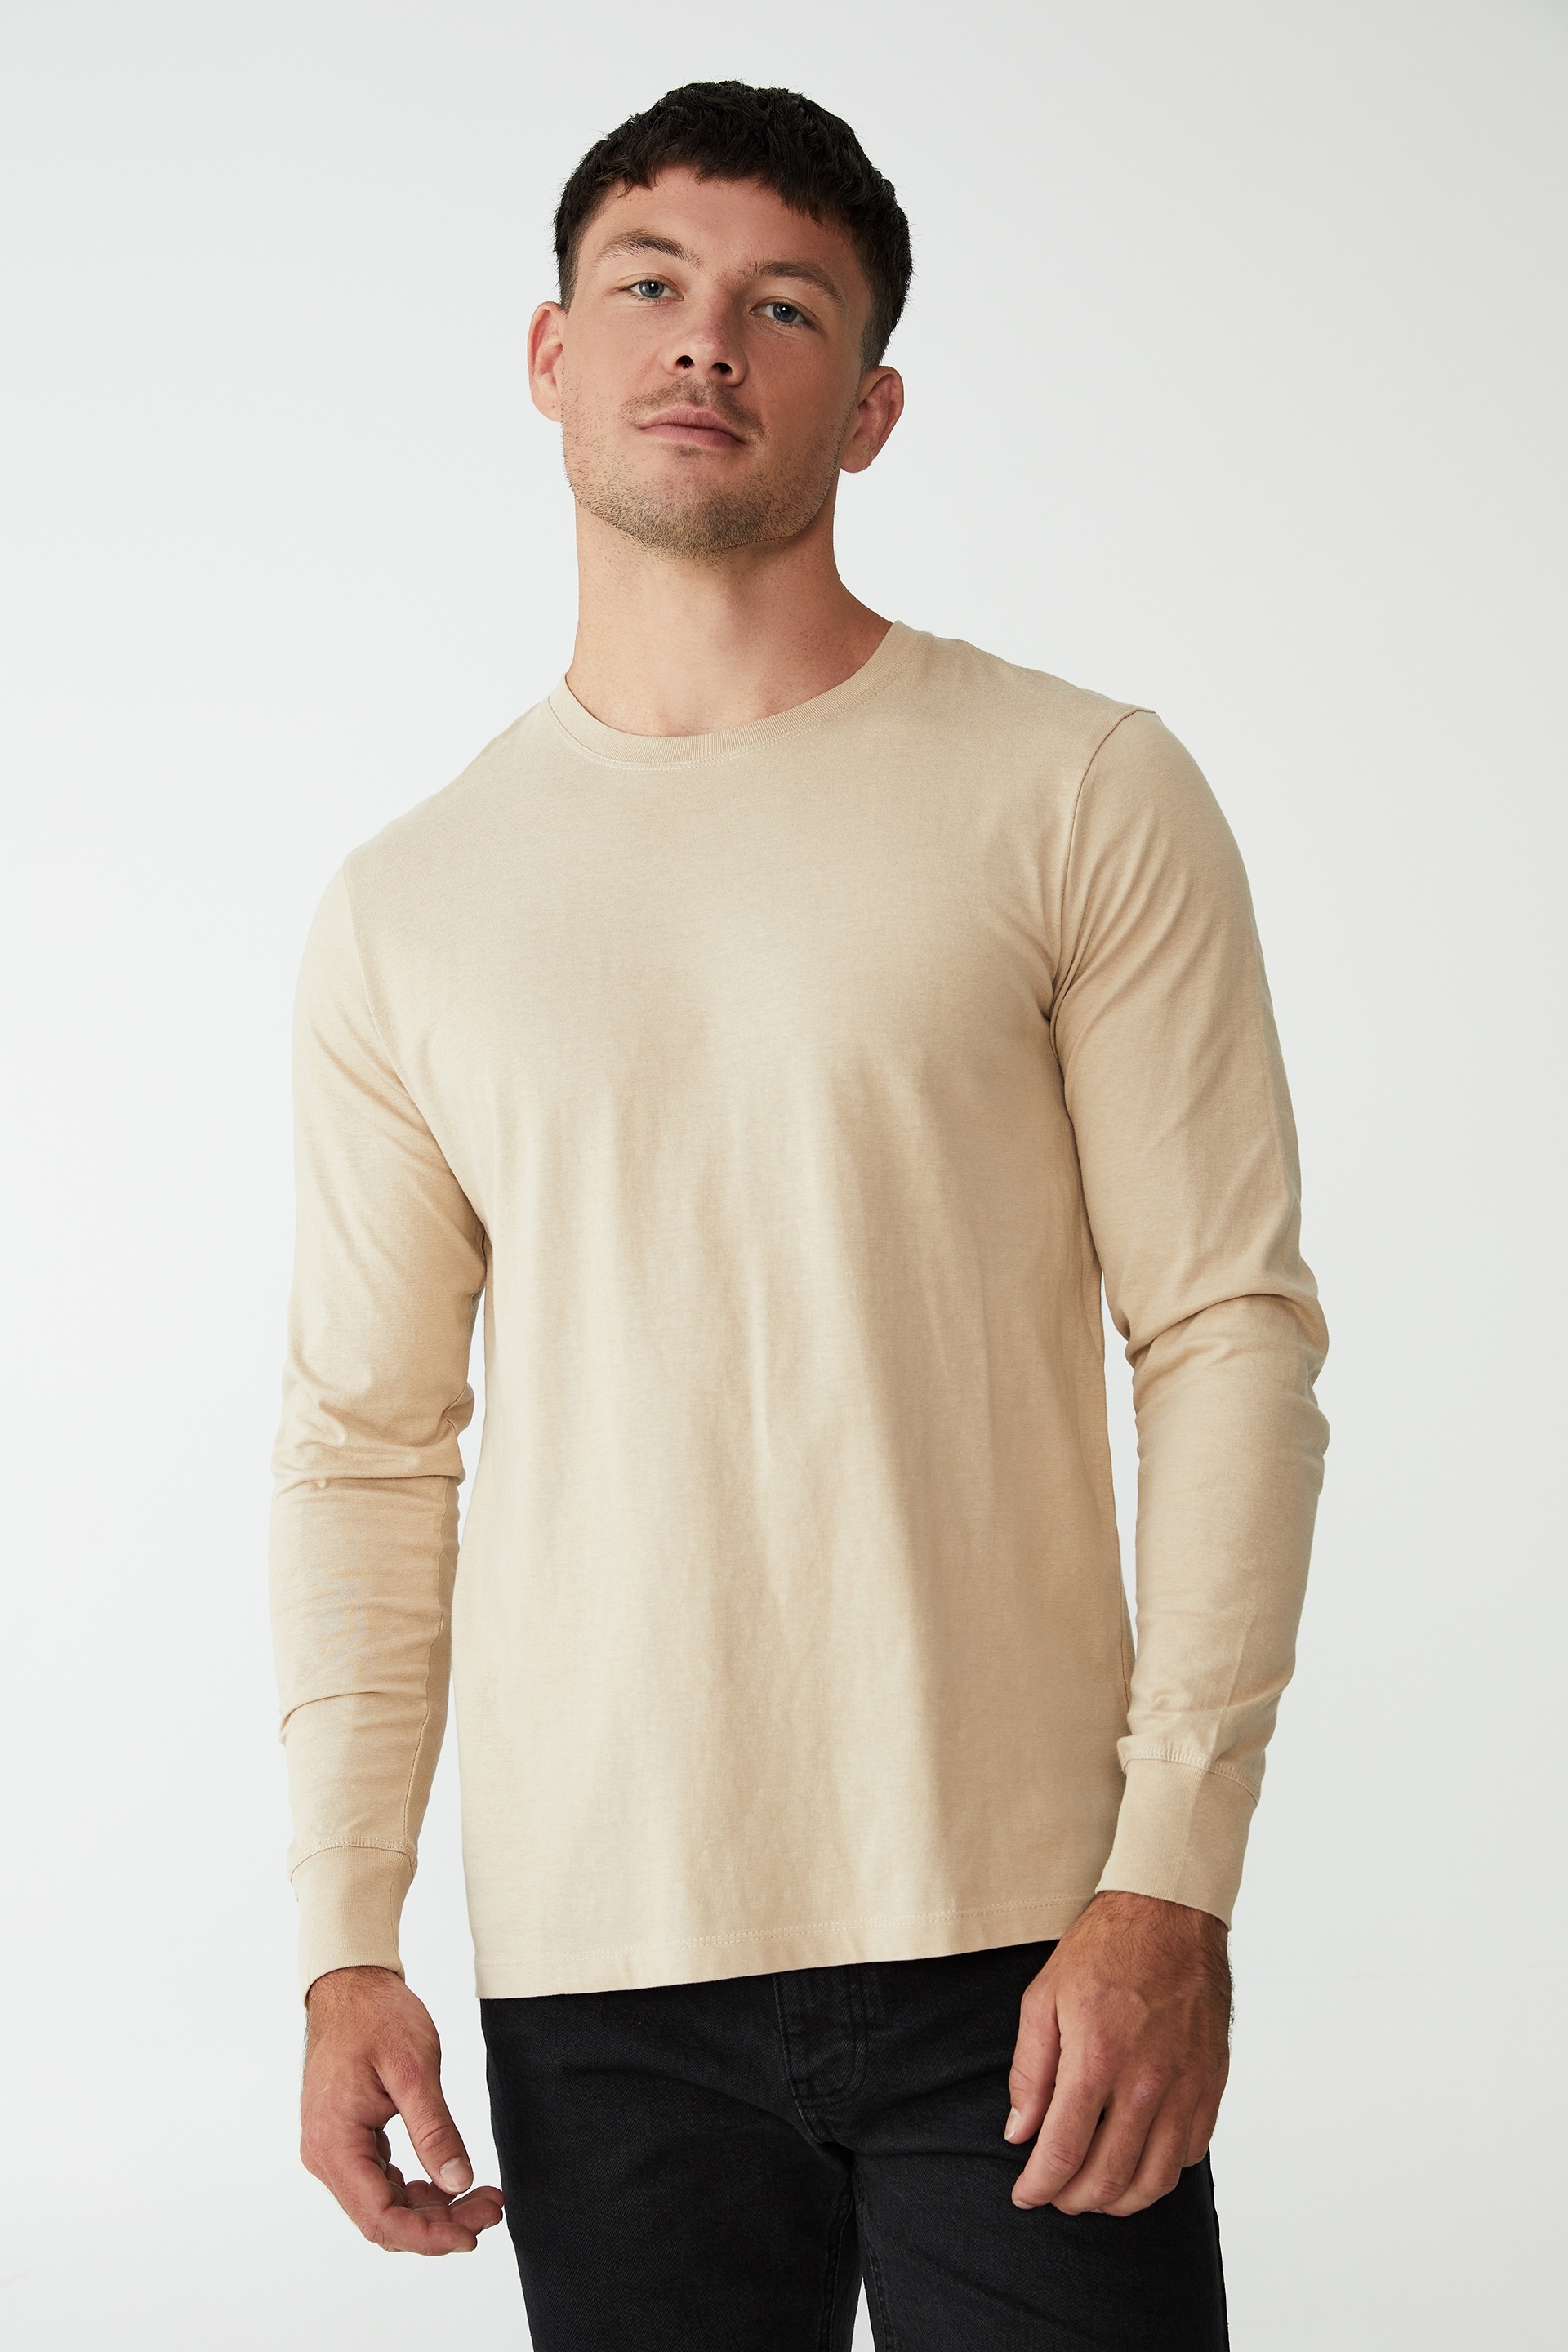 Cotton On Men - Organic Long Sleeve T-Shirt - Stone clay